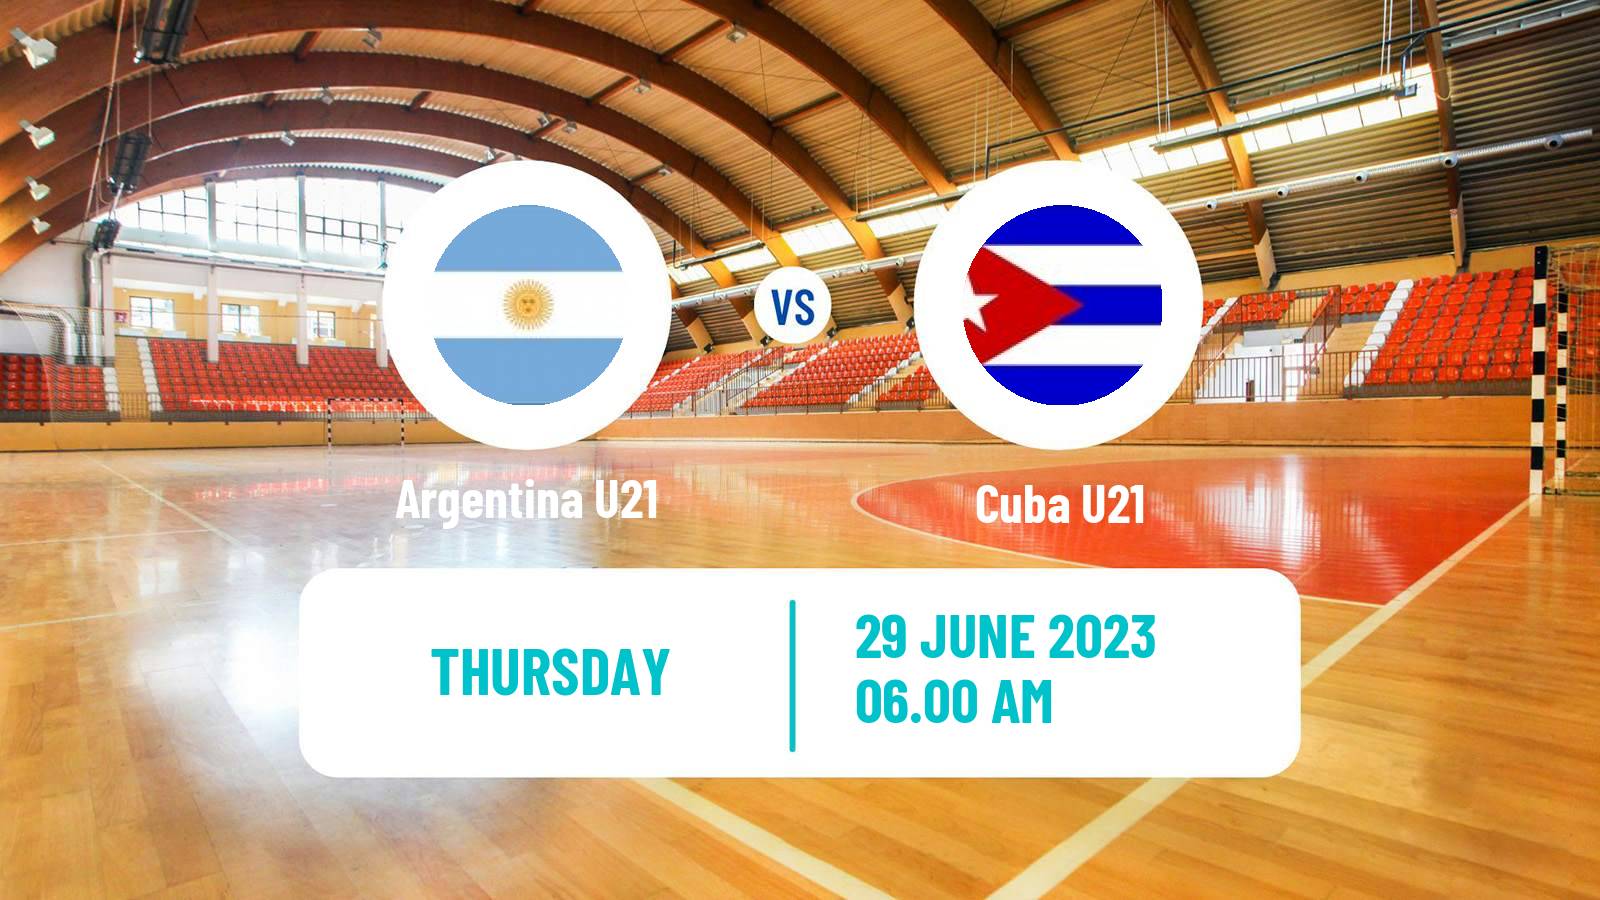 Handball World Championship U21 Handball Argentina U21 - Cuba U21